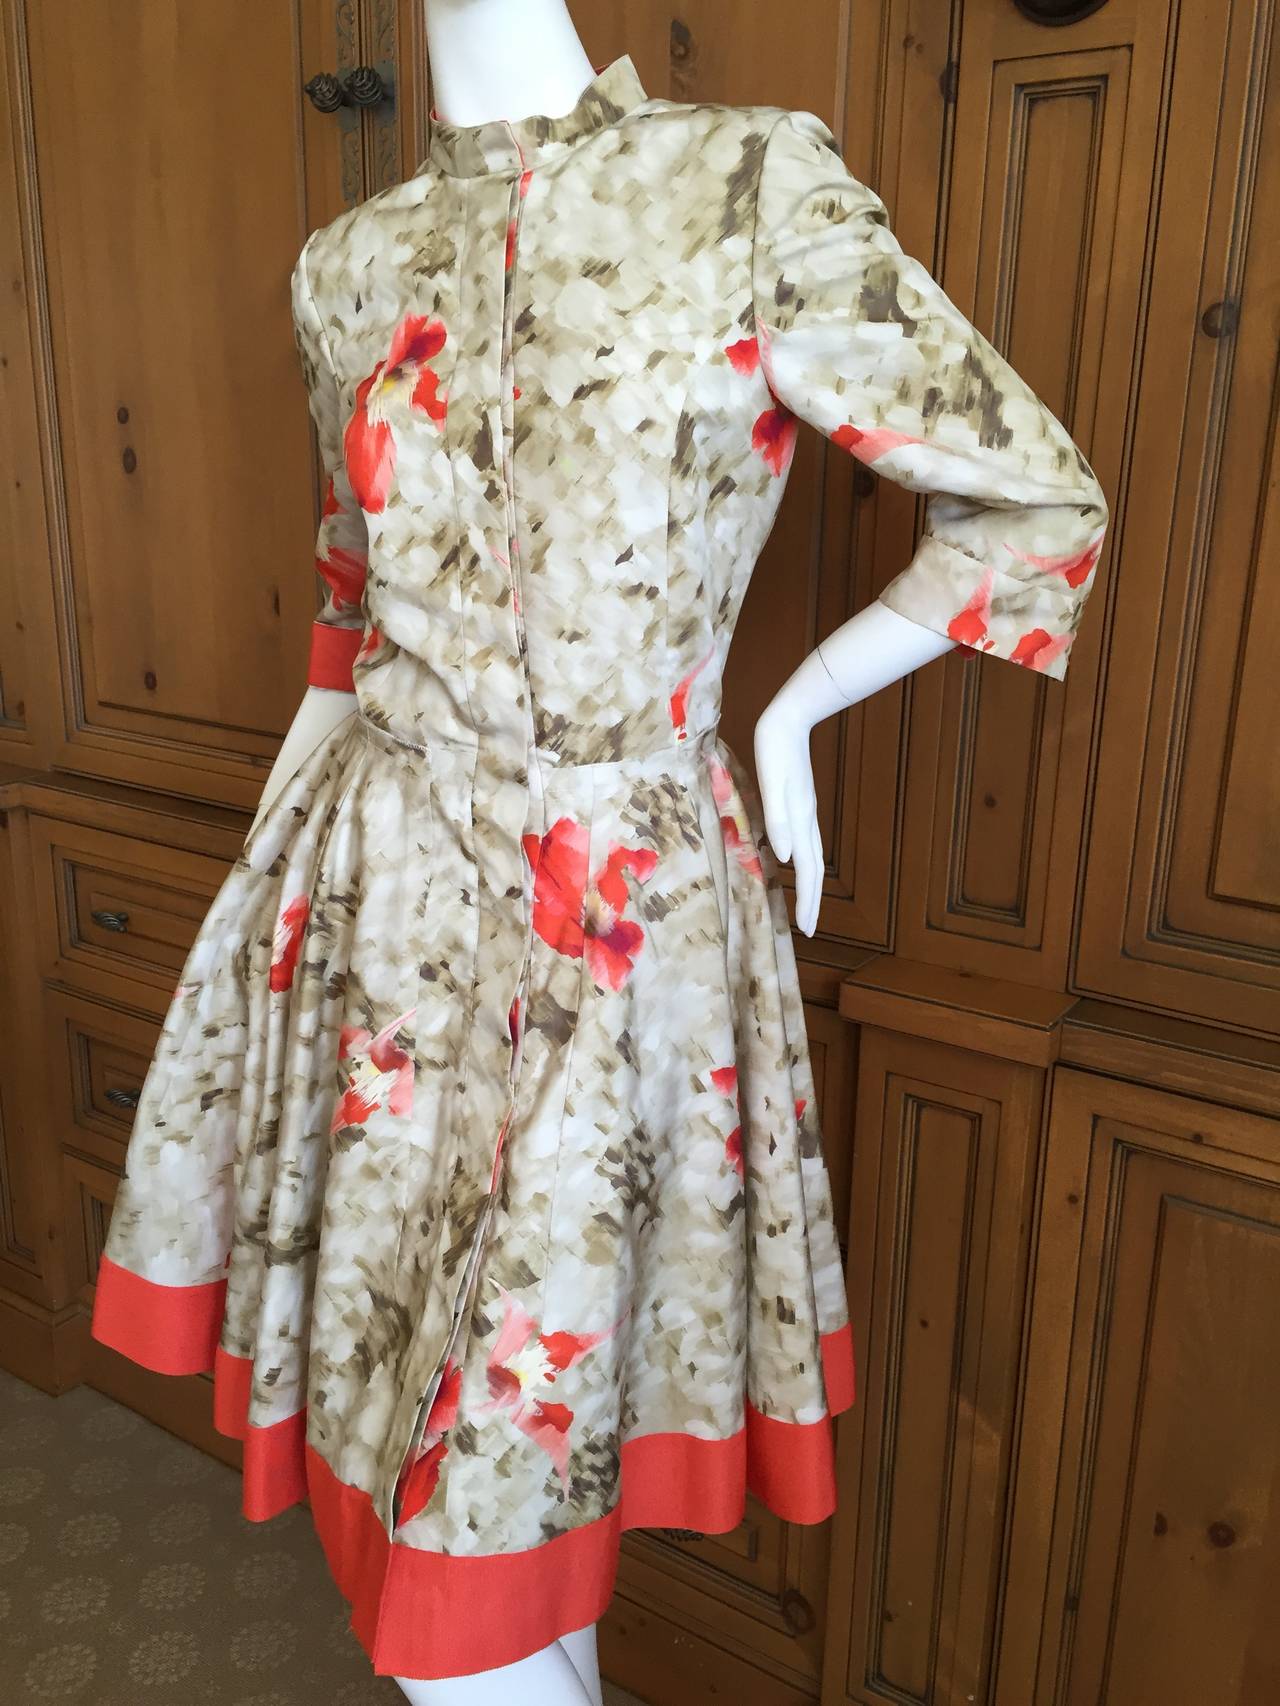 Oscar de la Renta Delightful Vintage Silk Floral Dress
This is really pretty, so ladylike. 
Size 6
Bust 35